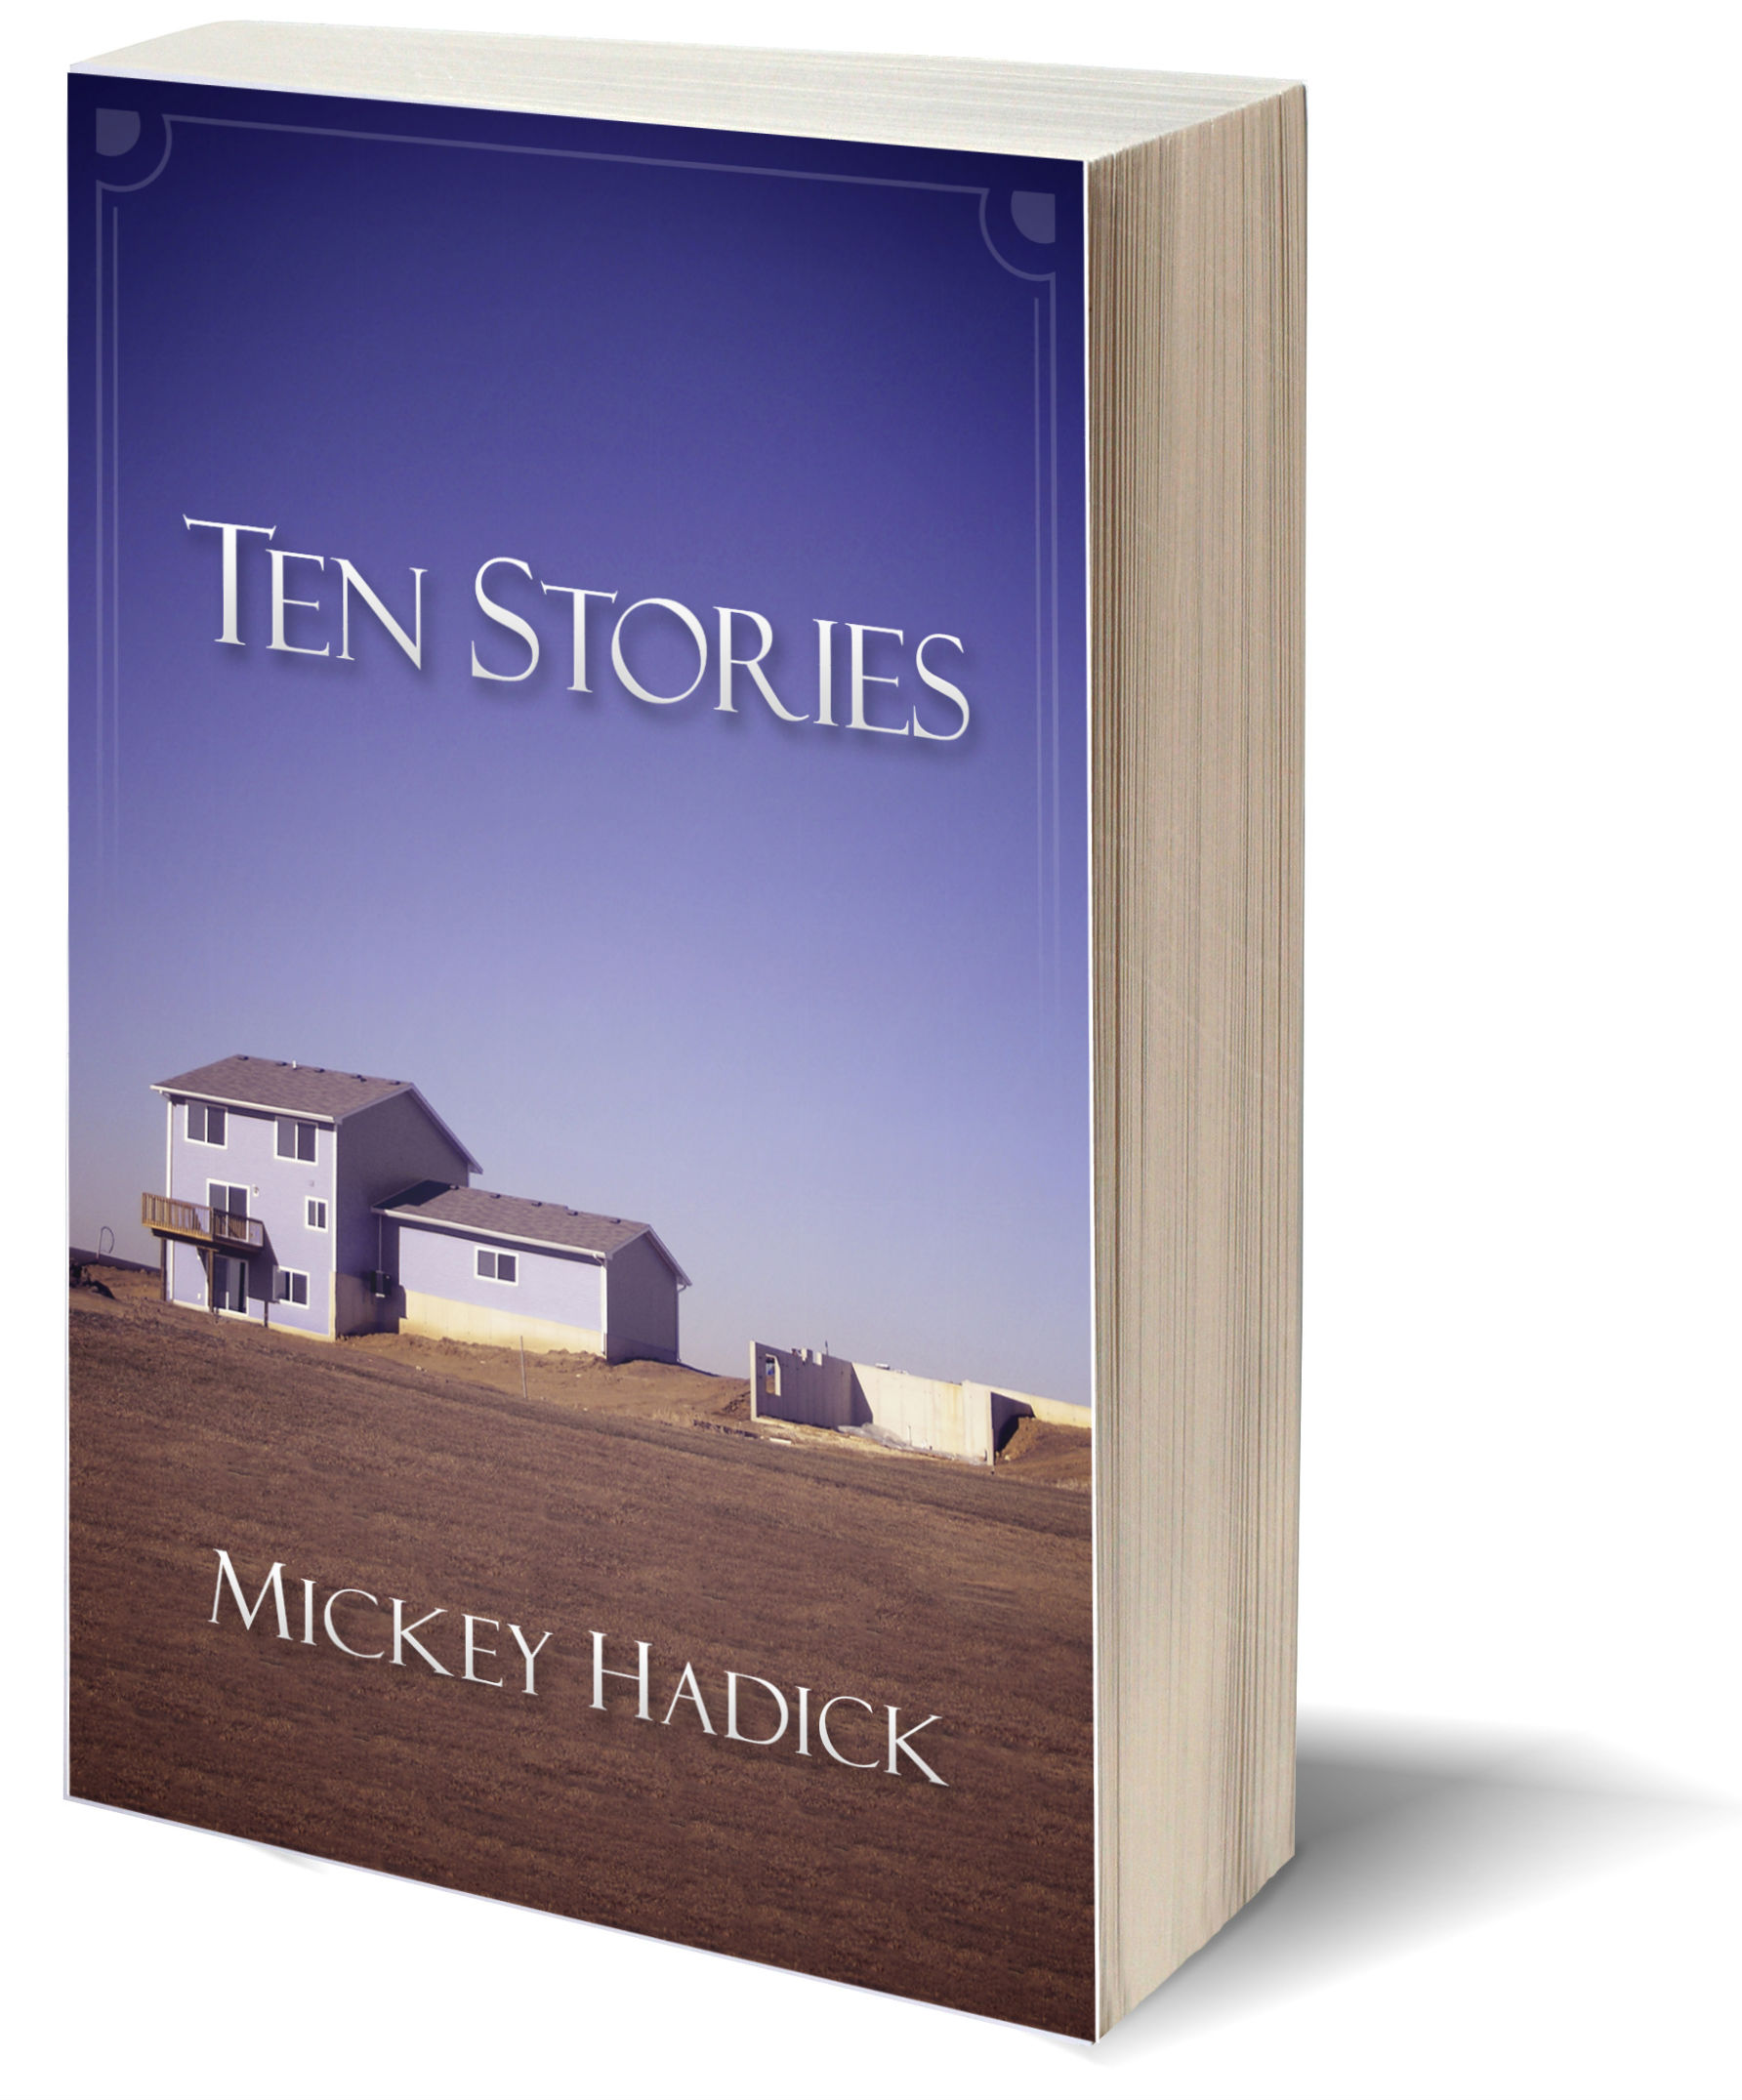 Ten Stories by Mickey Hadick